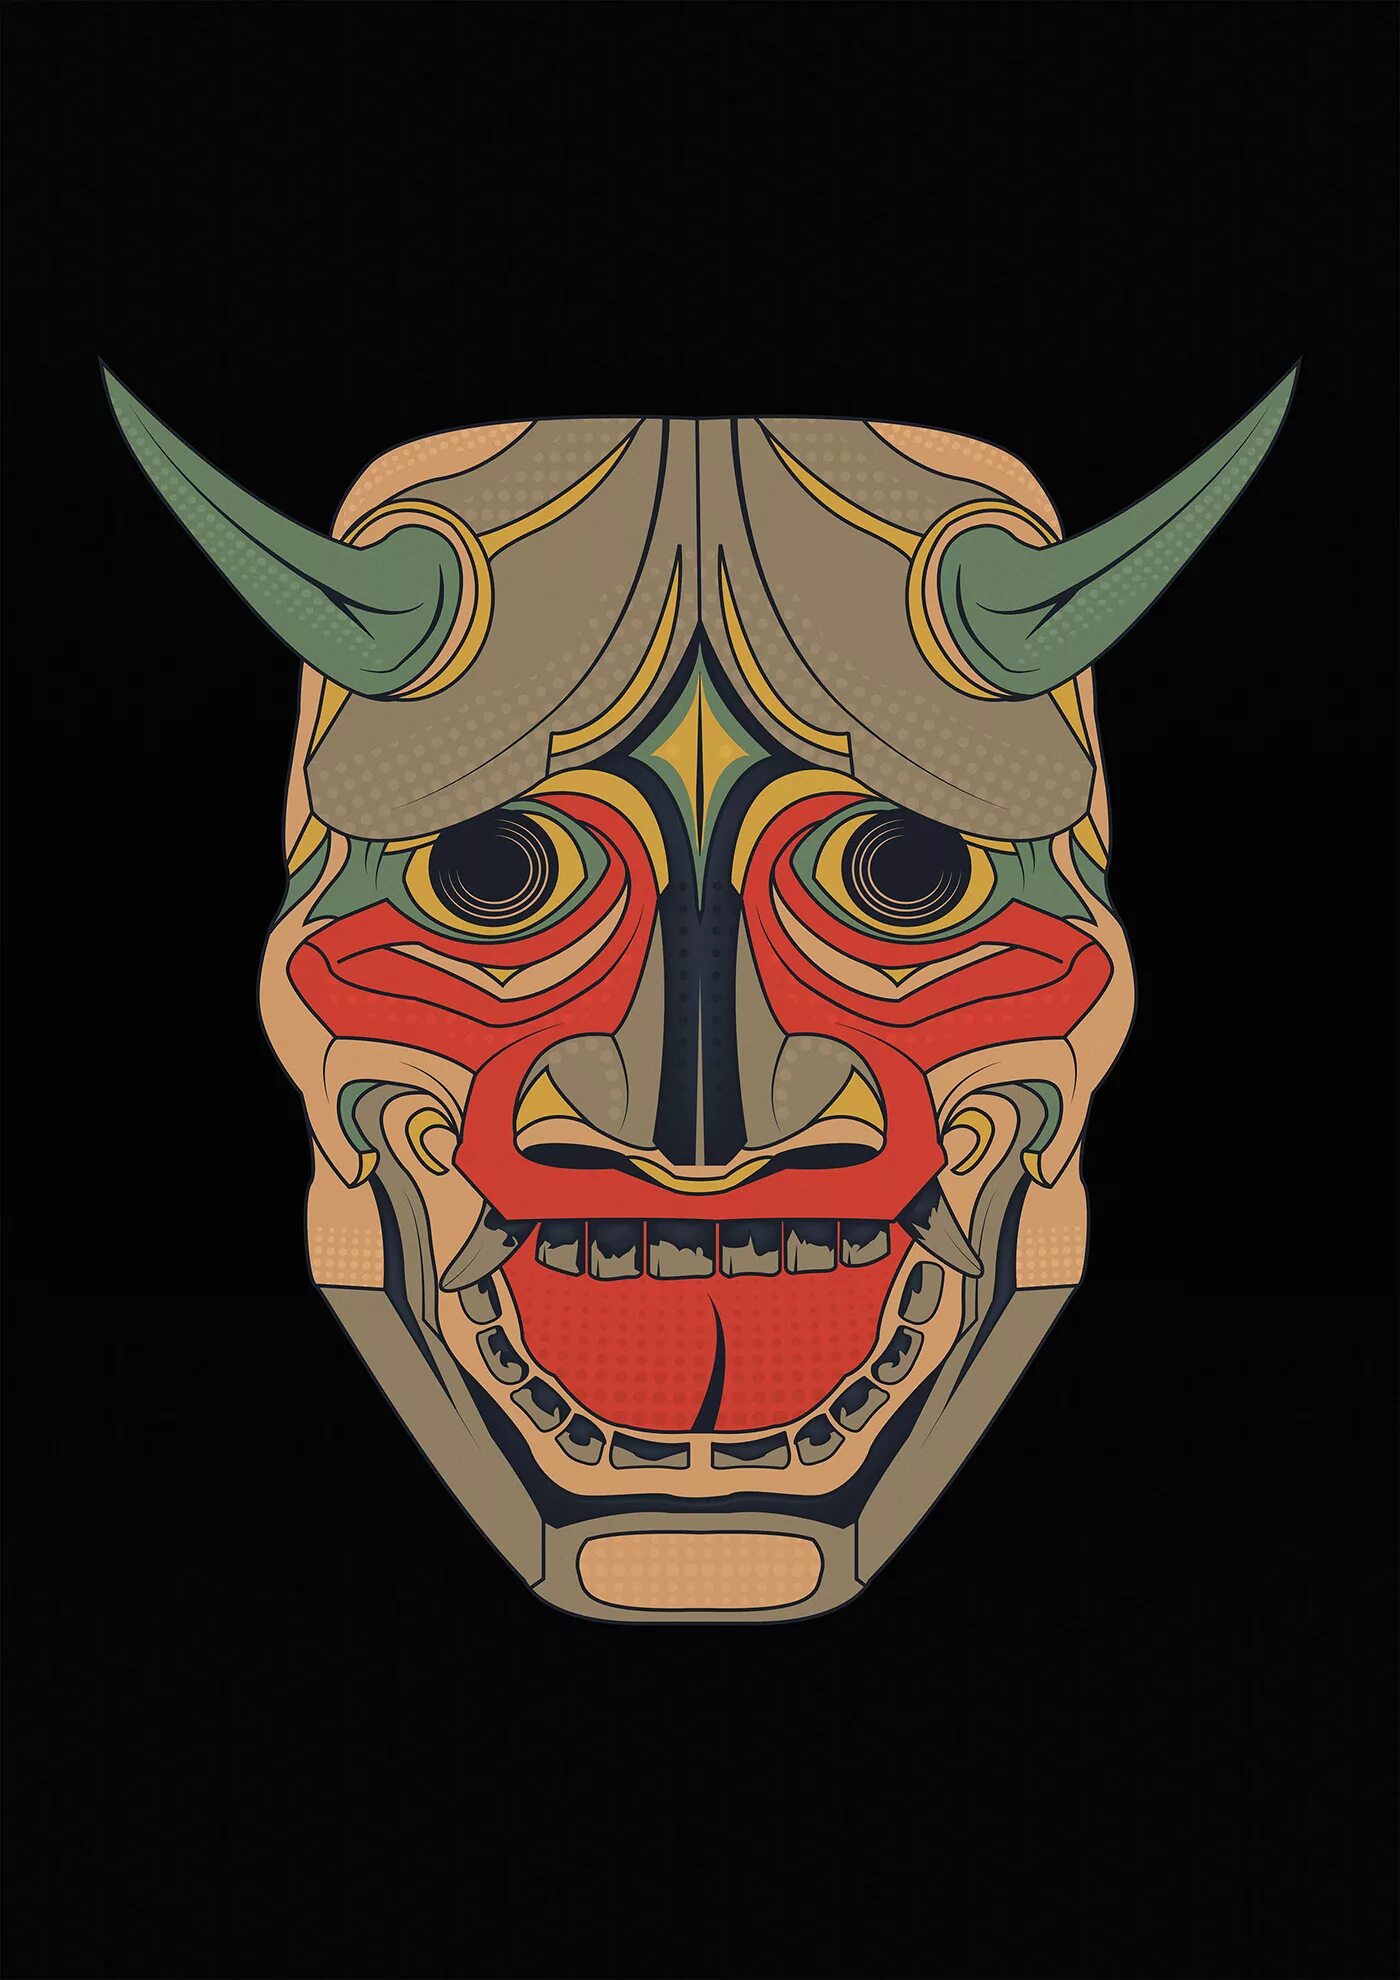 Японская маска они. Хання маска Самурай половина. Японская маска Hannya самурая. Японская маска демона Ханья. Хання маска Самурай арт.